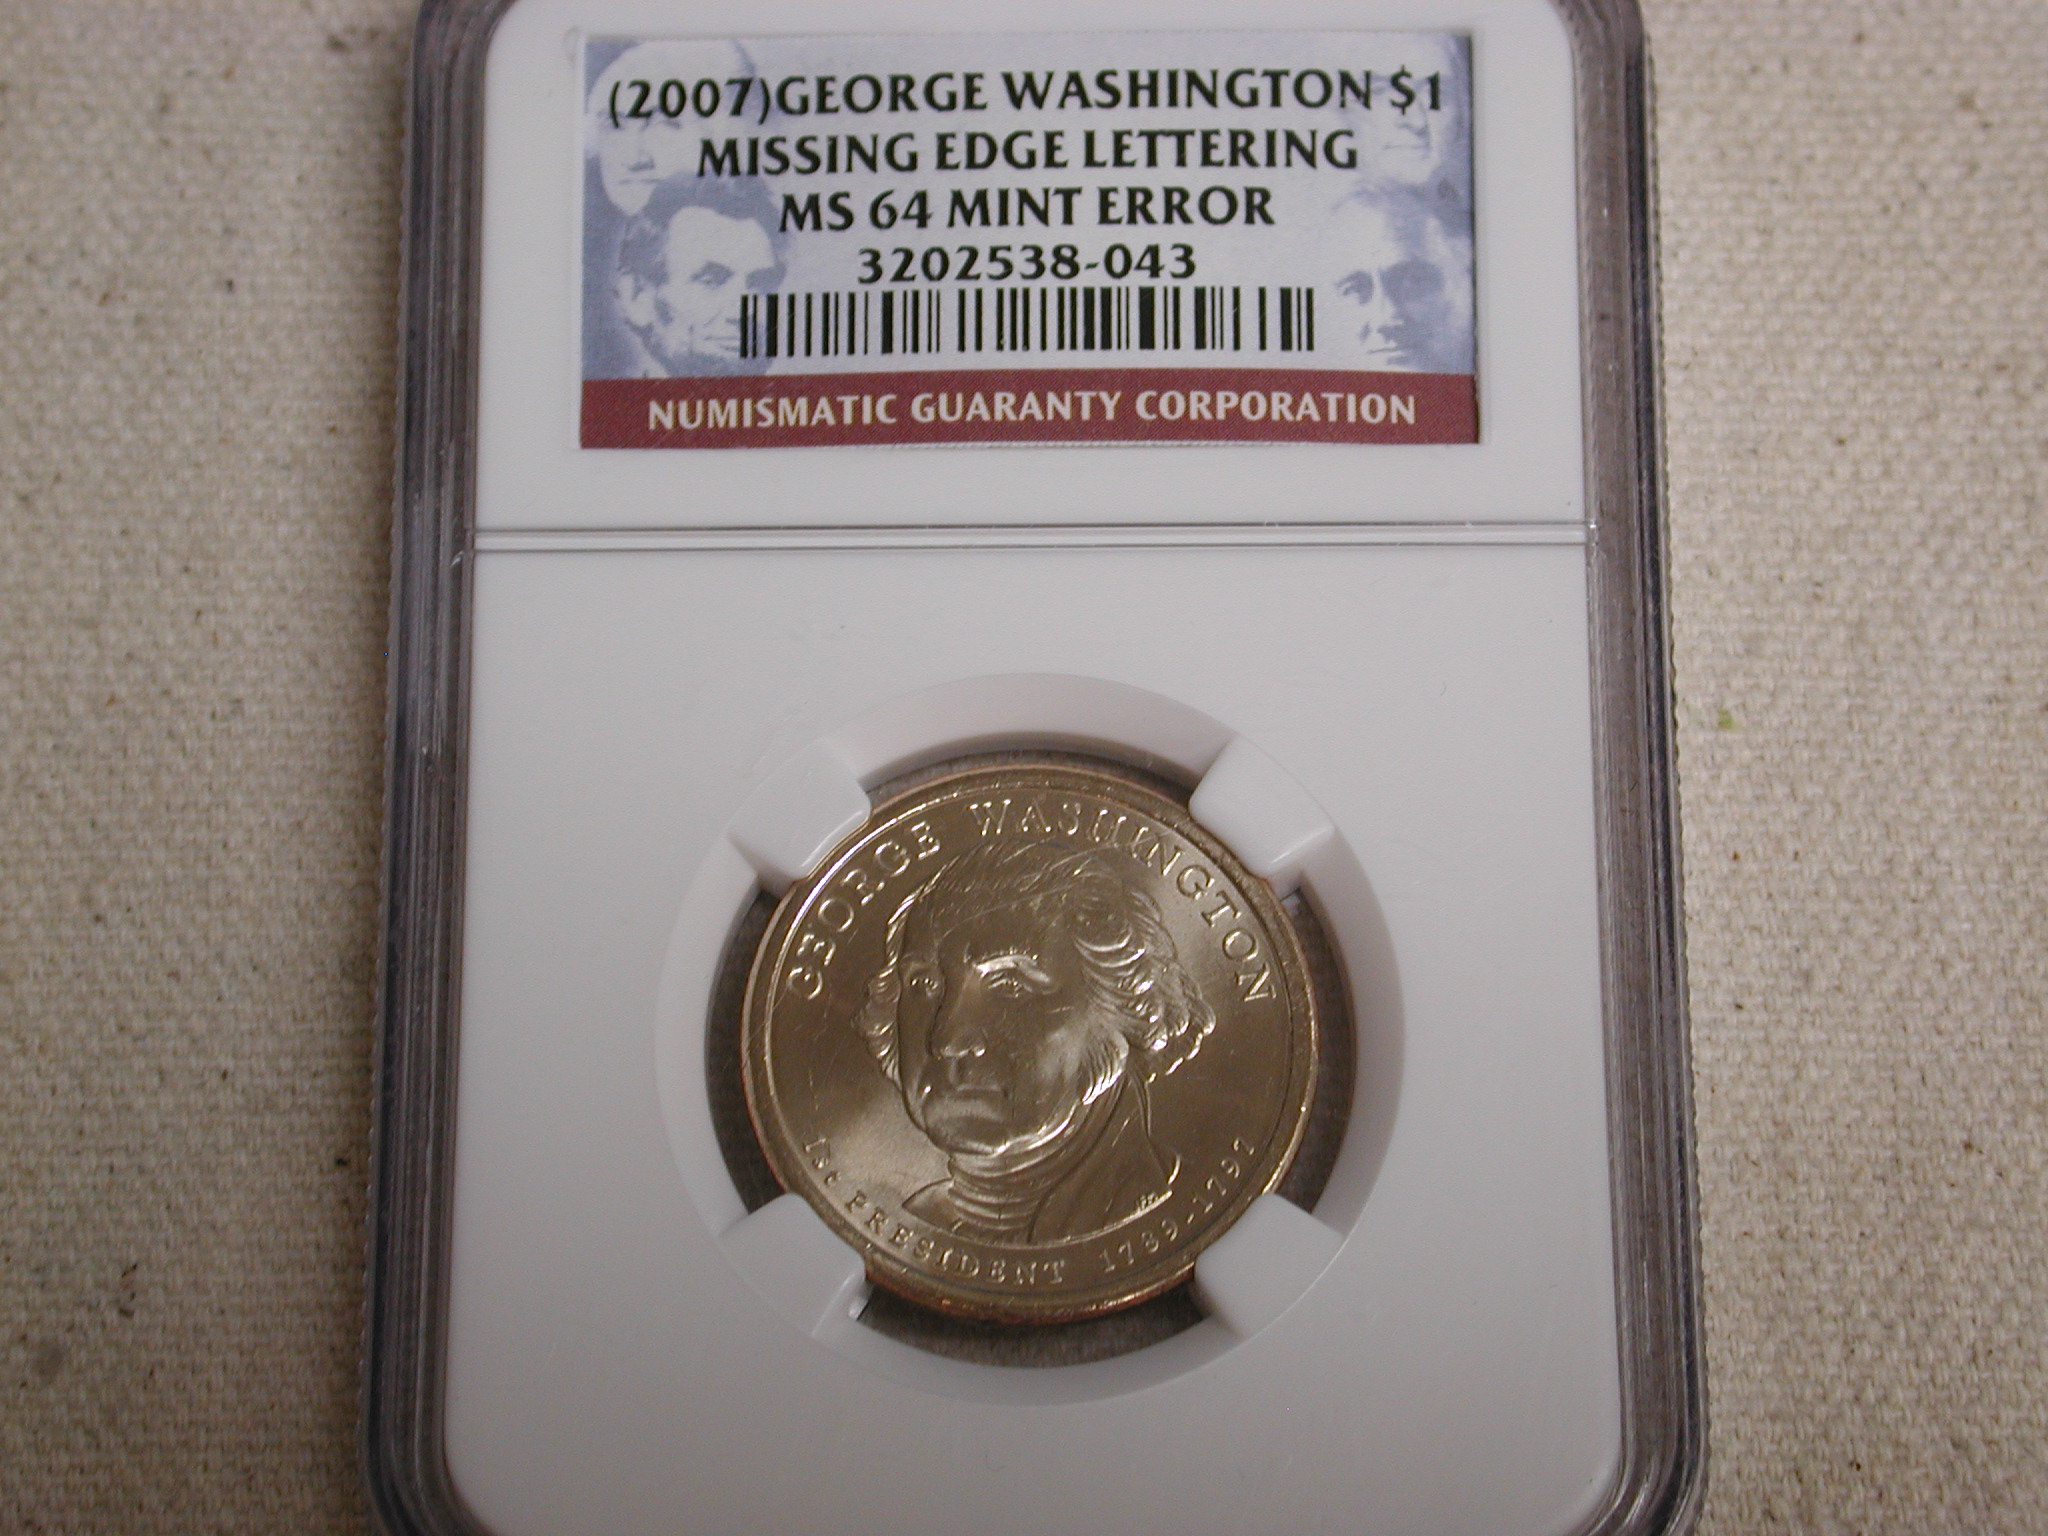 2007 George Washington $1 Missing Edge Lettering MS 64 Mint ERROR